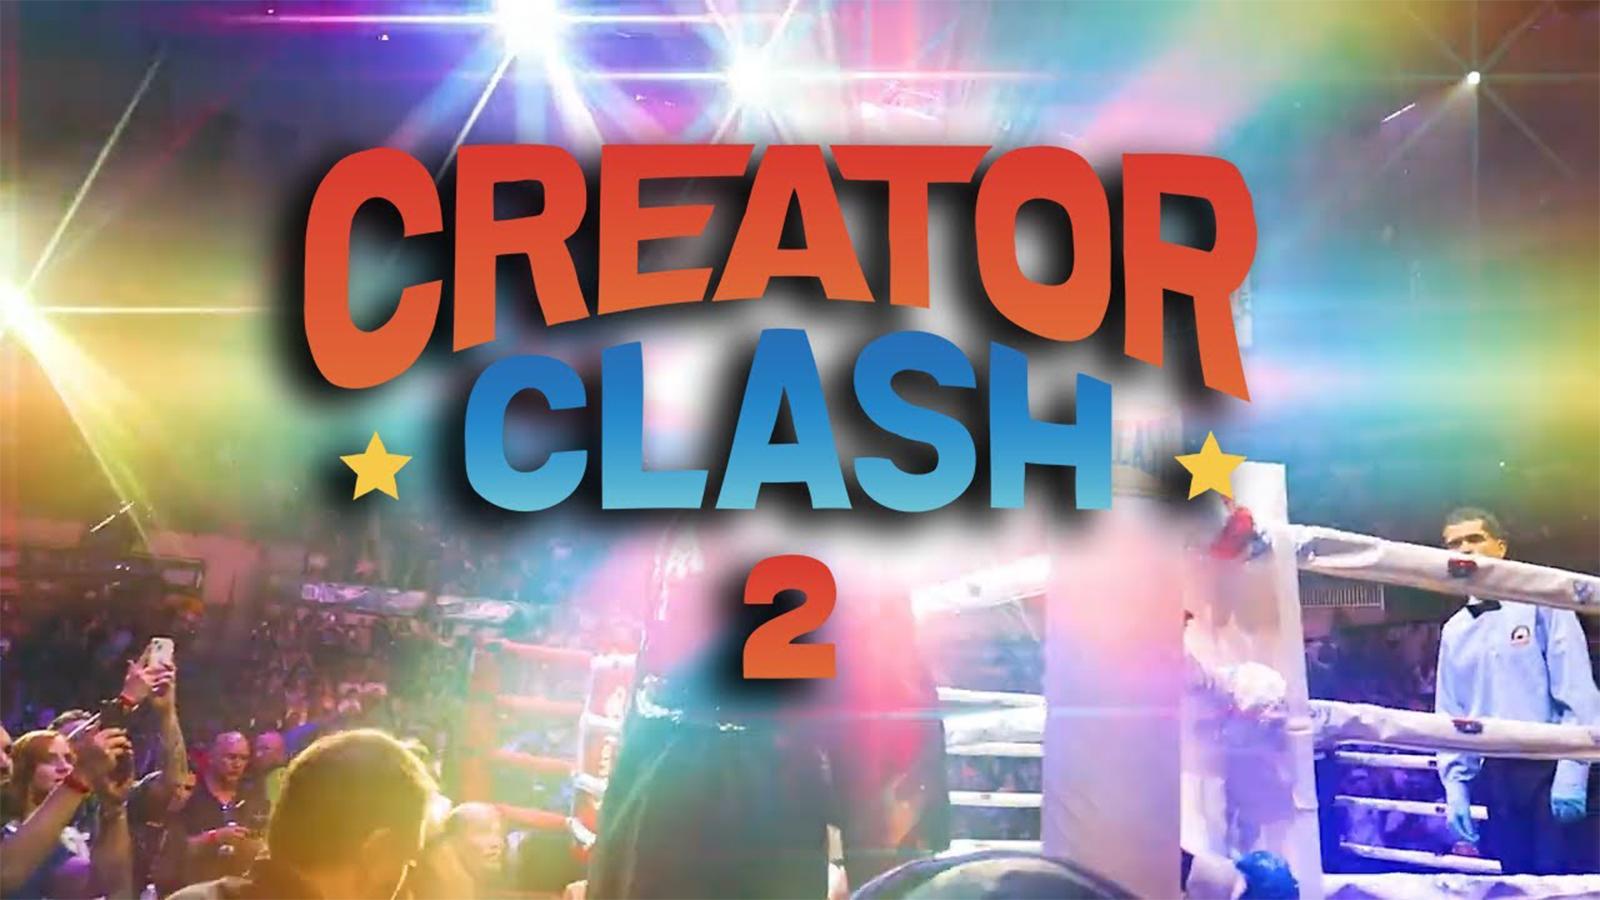 Creator Clash 2 how to watch